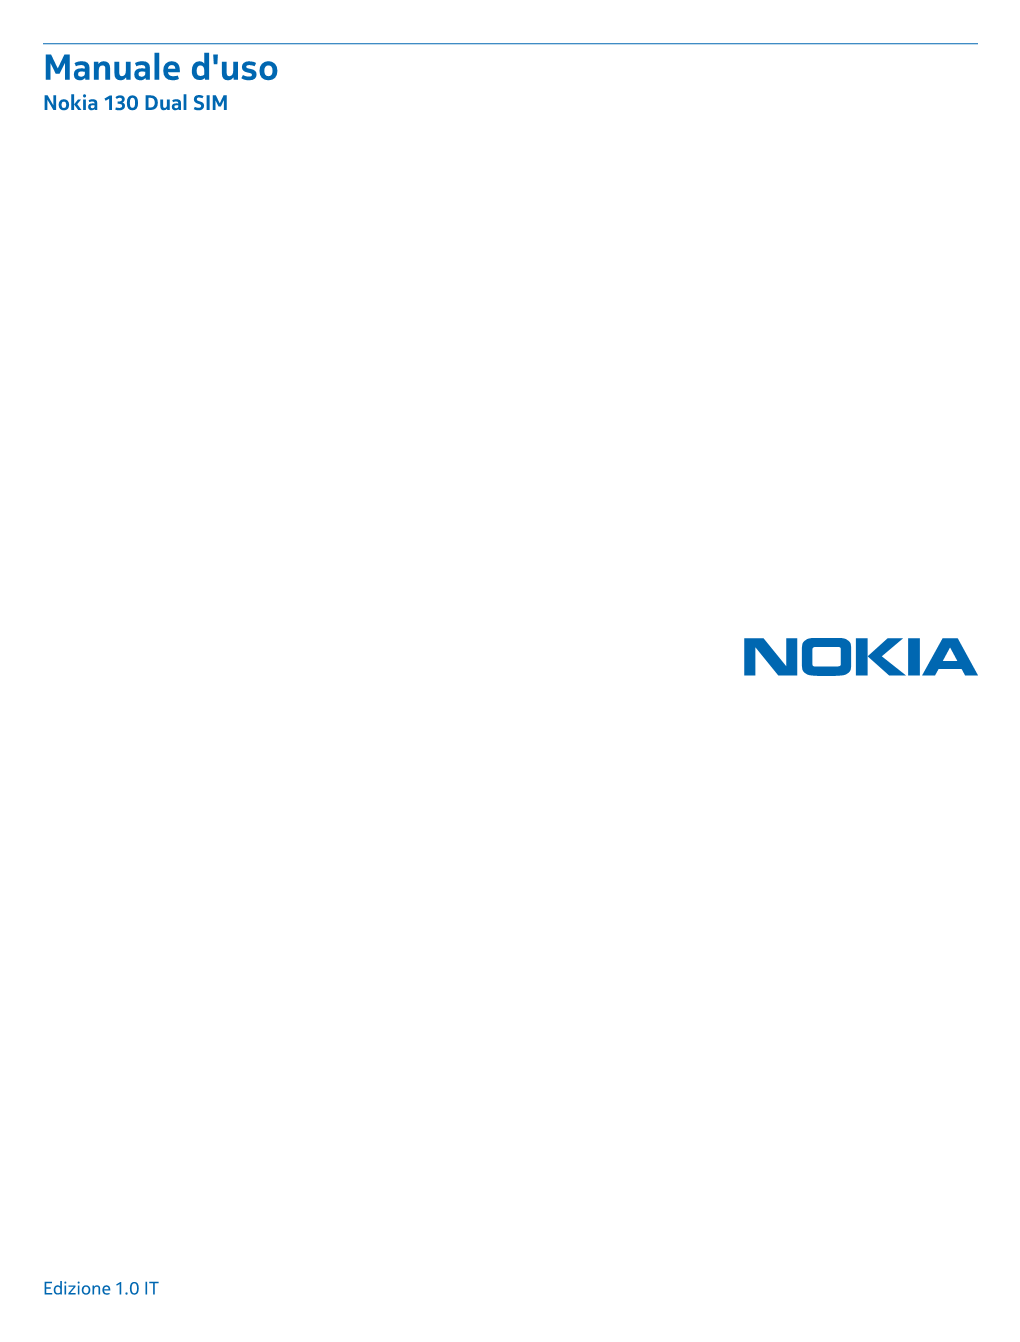 Manuale D'uso Del Nokia 130 Dual